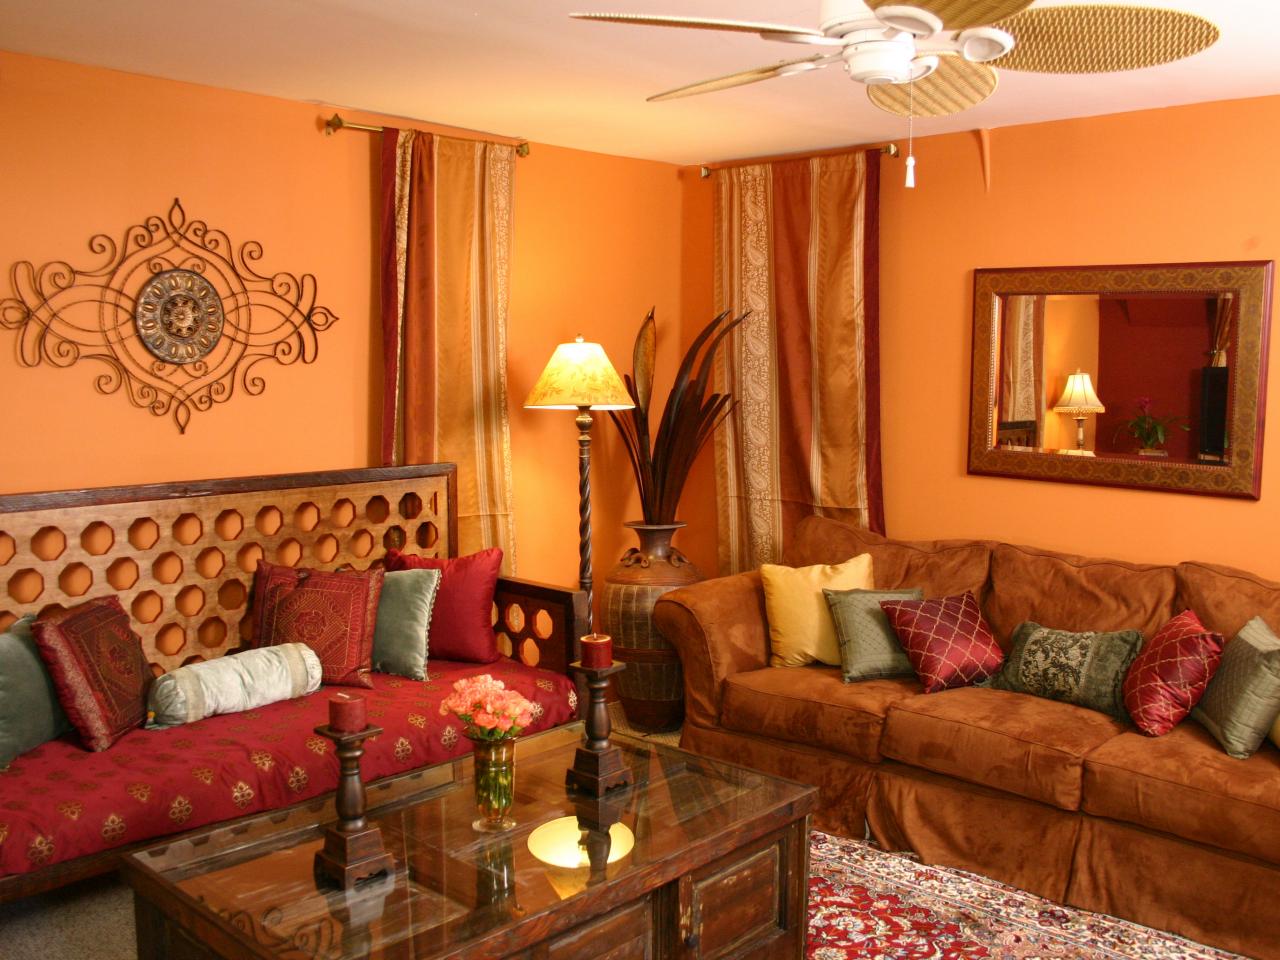 wallpaper for bedroom walls india,living room,room,property,furniture,interior design